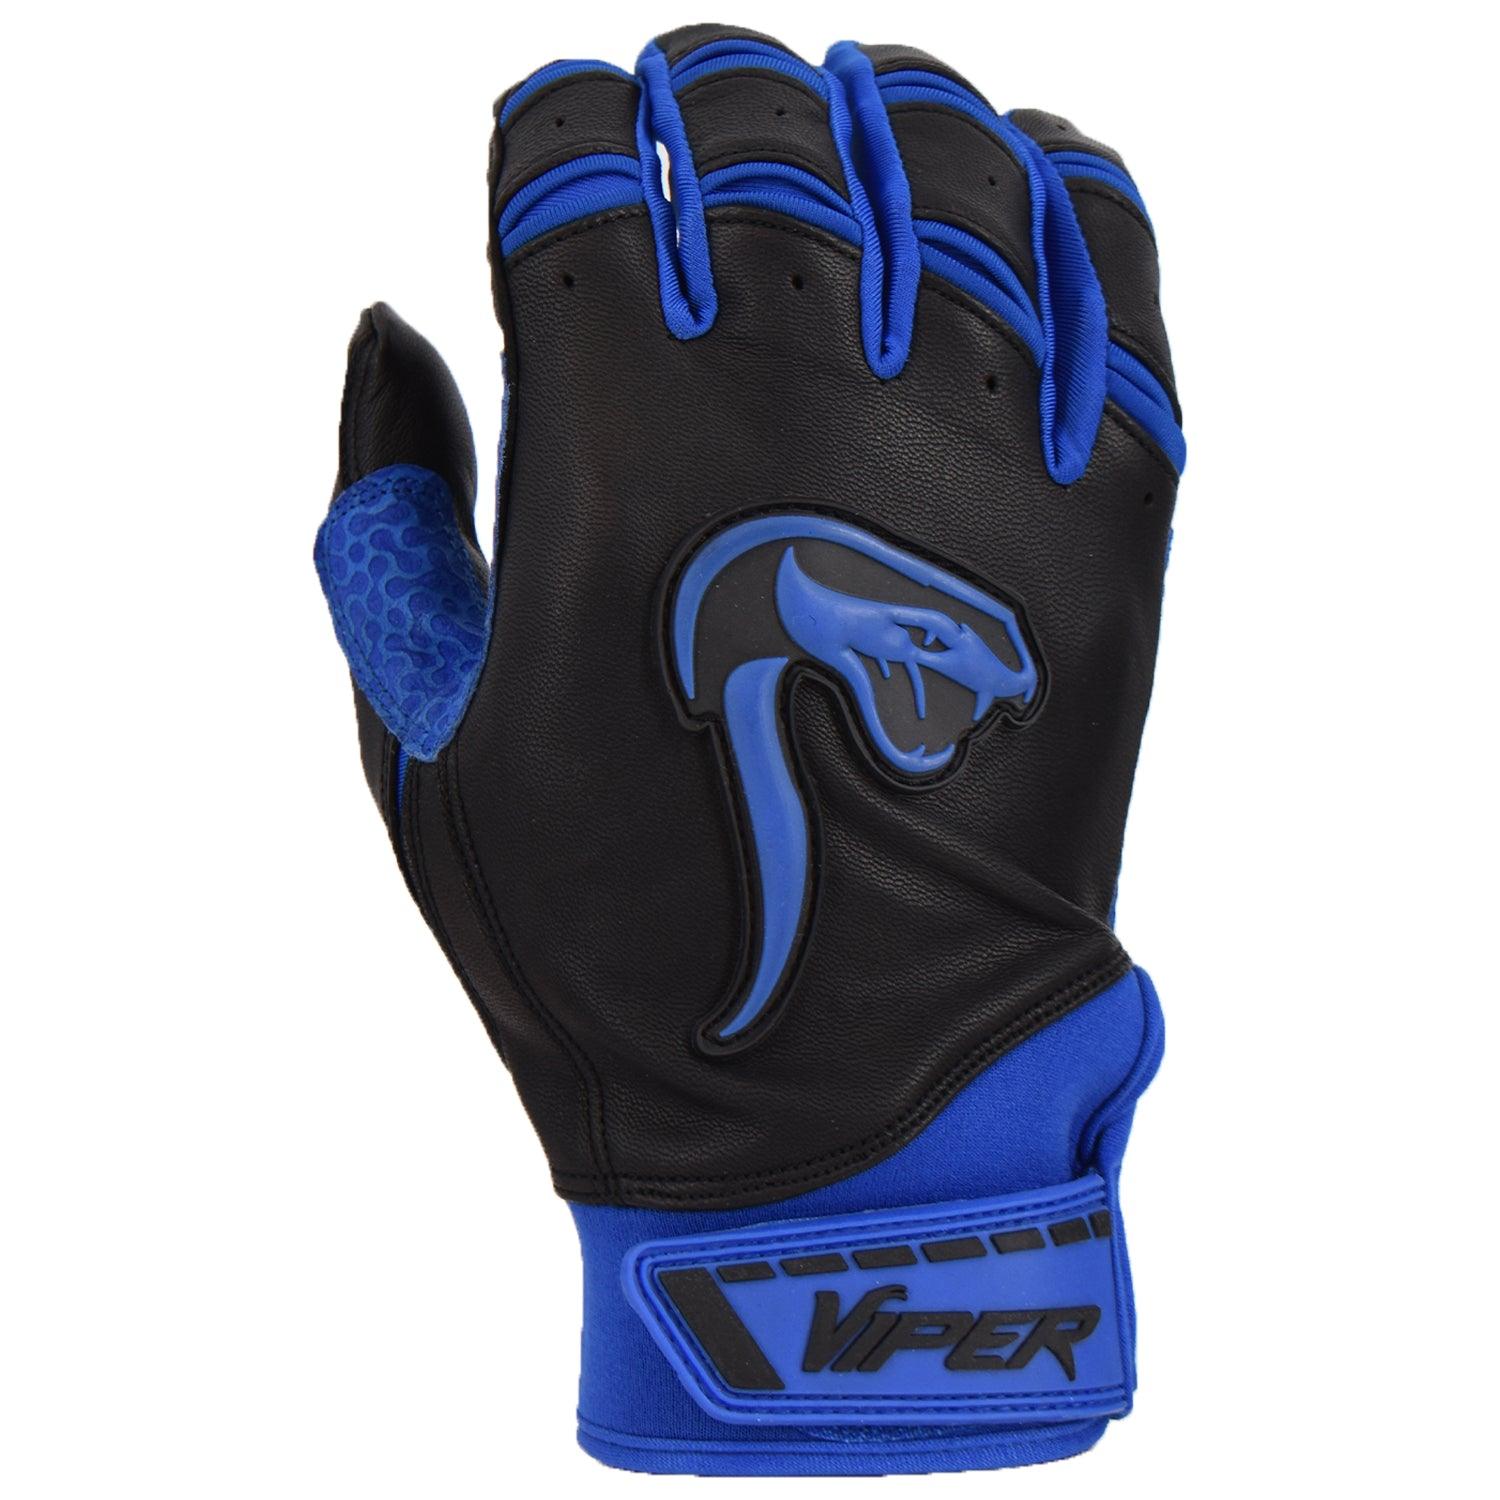 Viper Grindstone Short Cuff Batting Glove - Black/Royal Blue - Smash It Sports